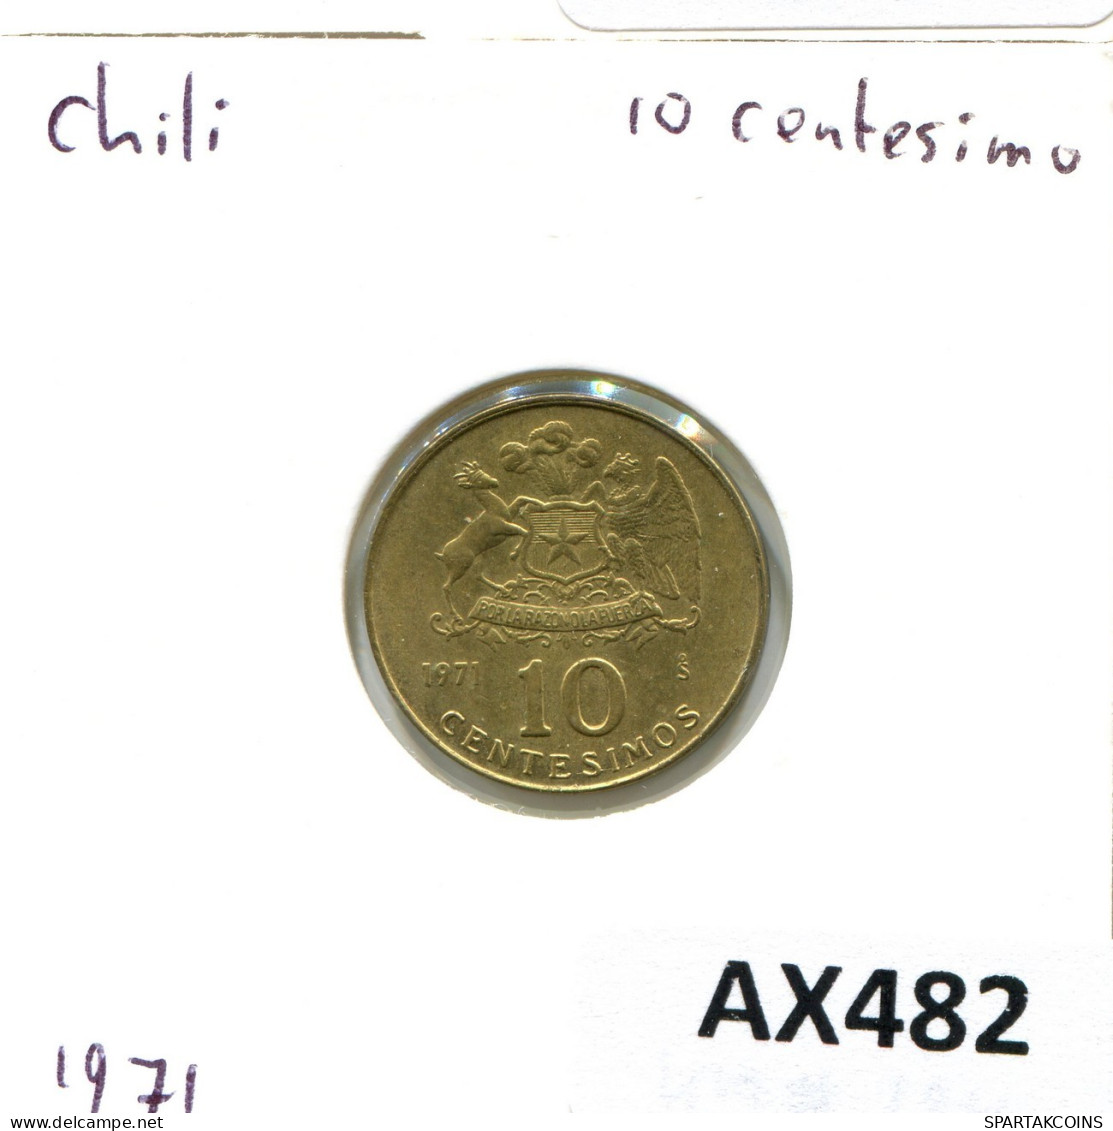 10 CENTESIMOS 1971 CHILE Coin #AX482.U.A - Chili